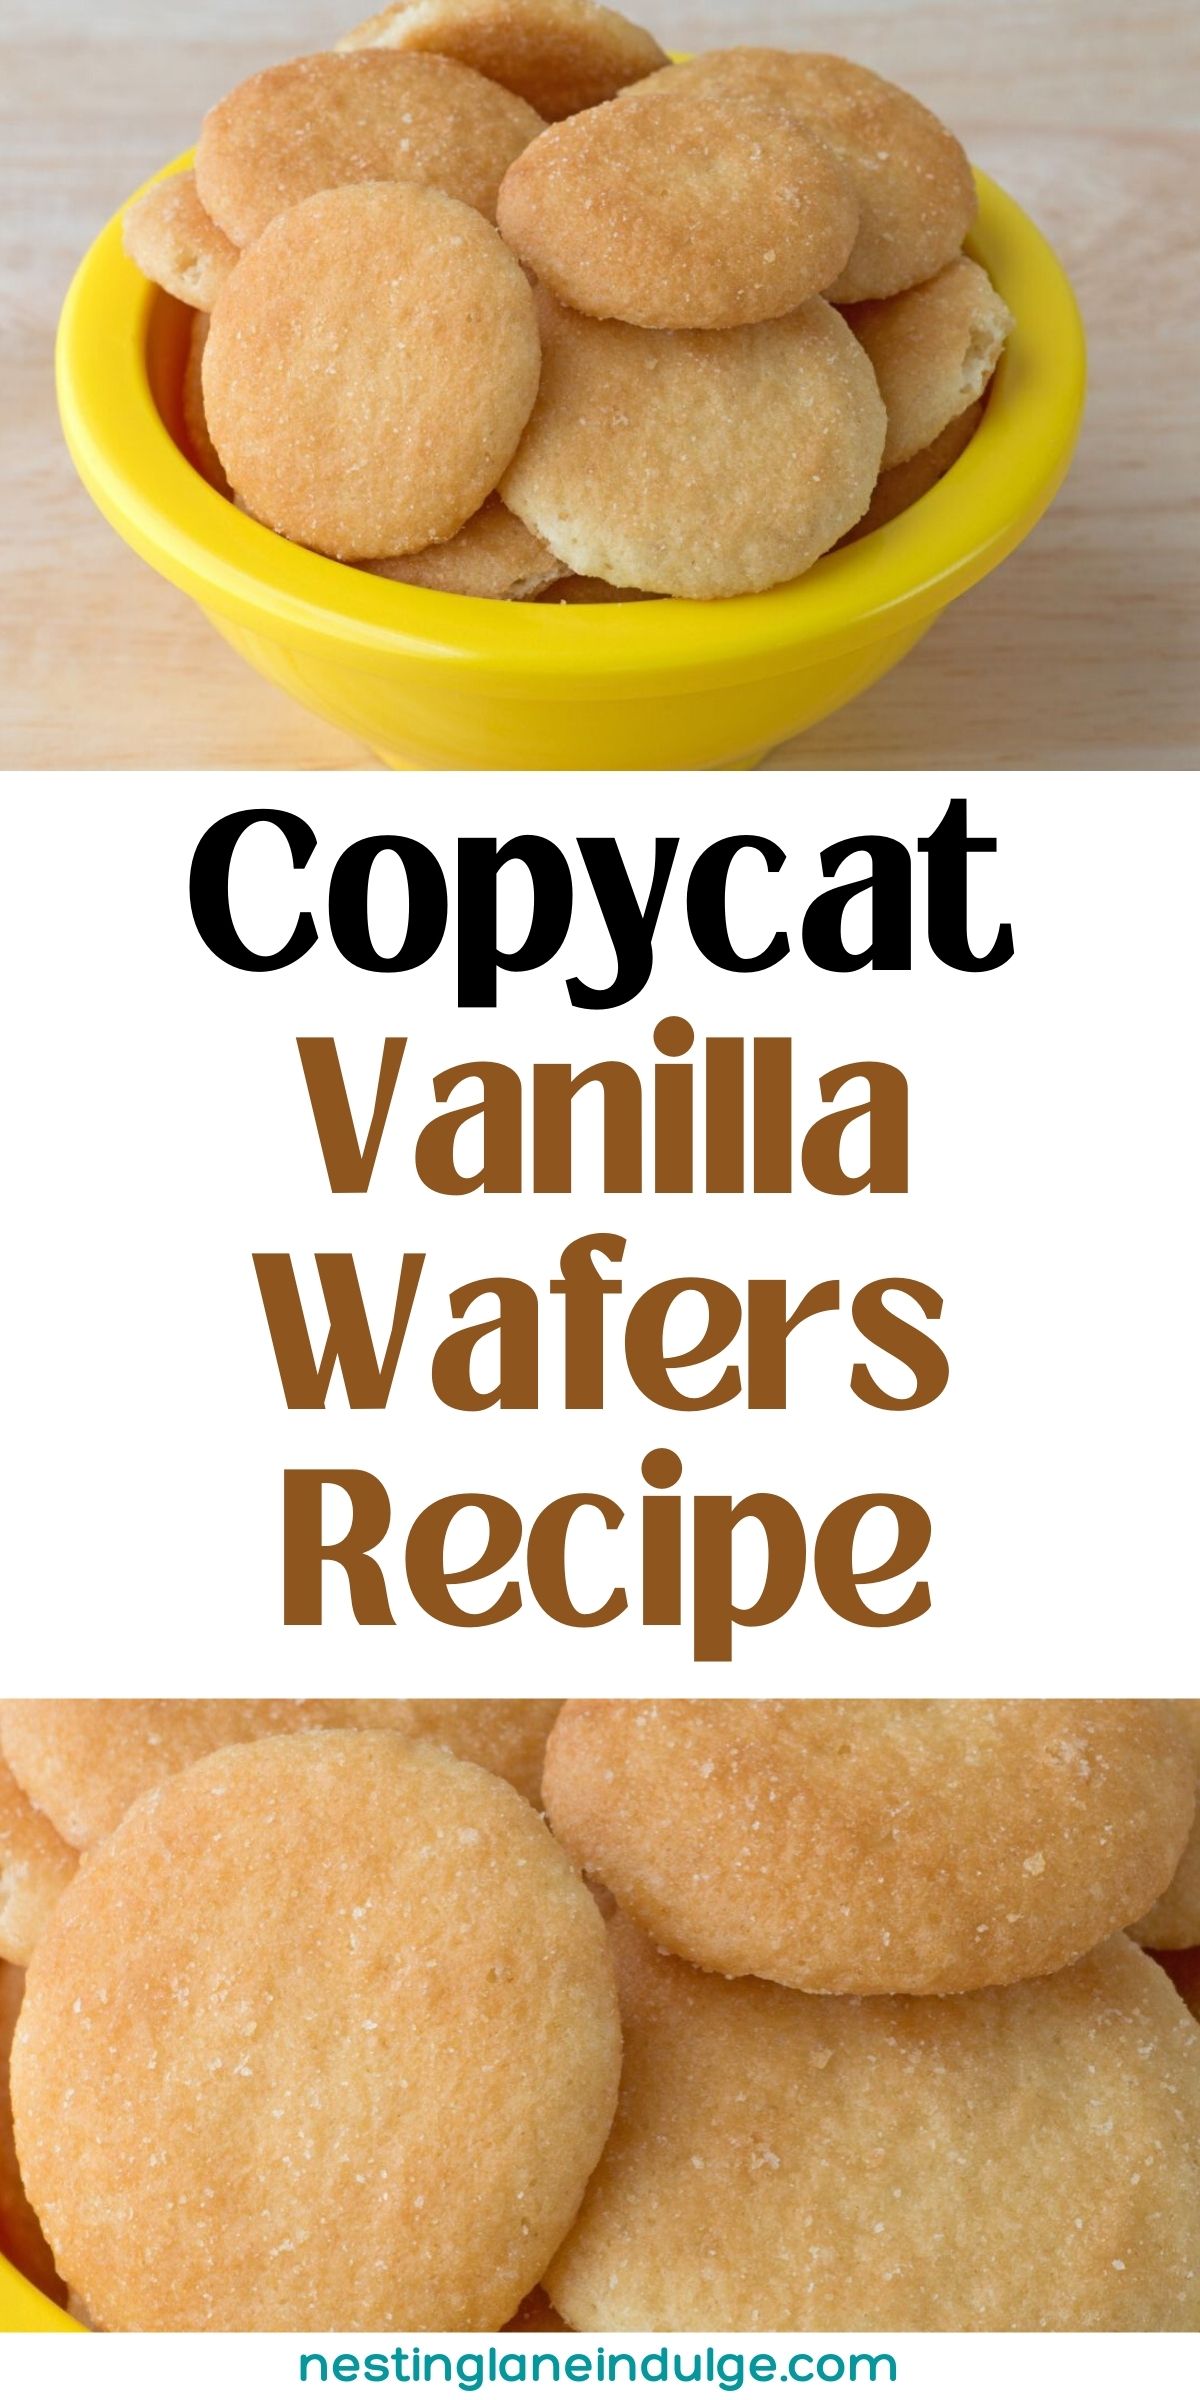 Copycat Vanilla Wafers Recipe graphic.